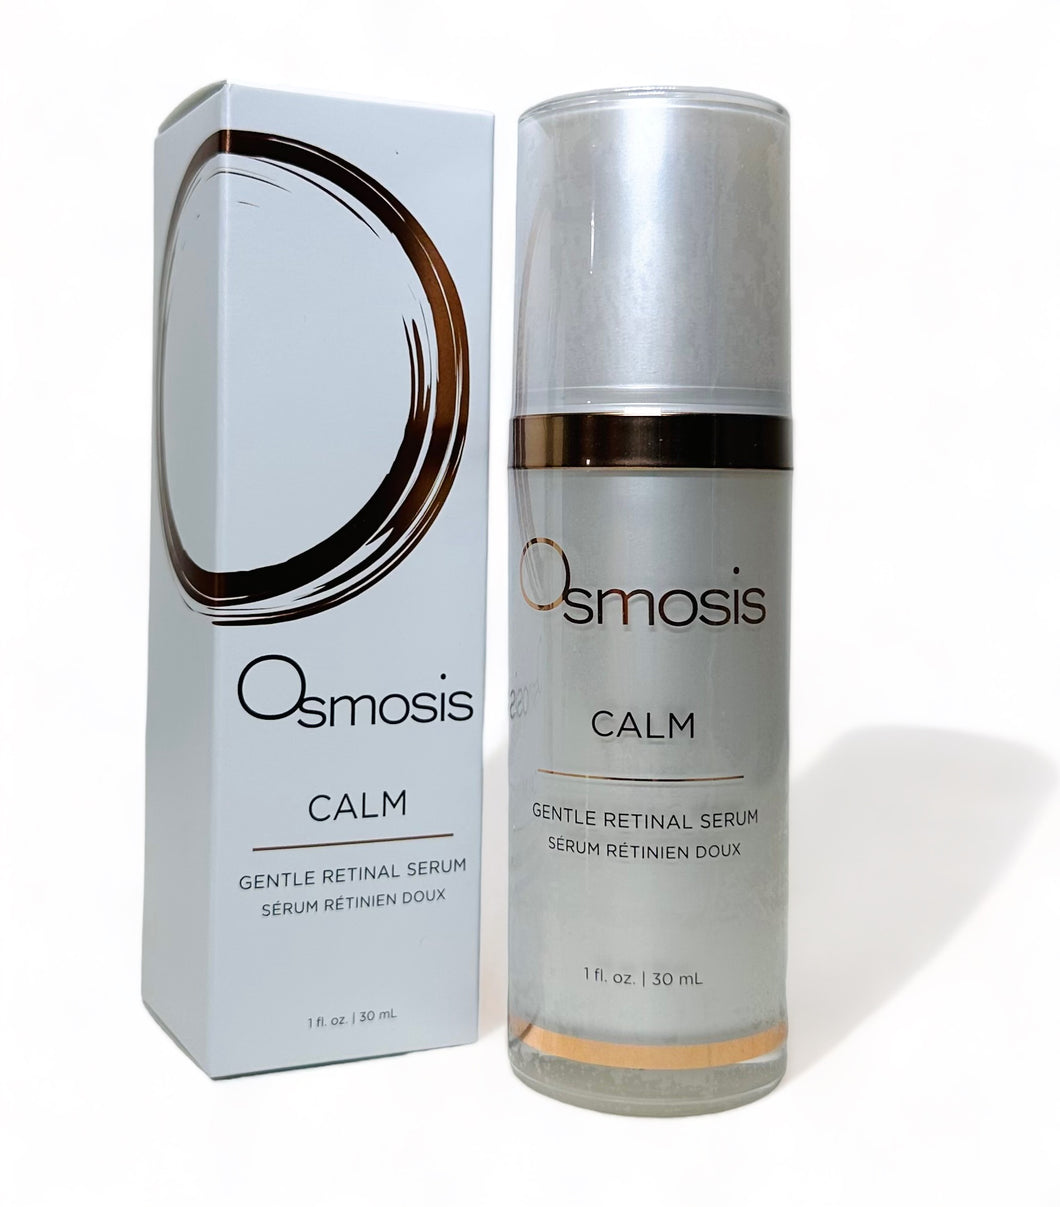 Osmosis Calm Gentle Retinal Serum